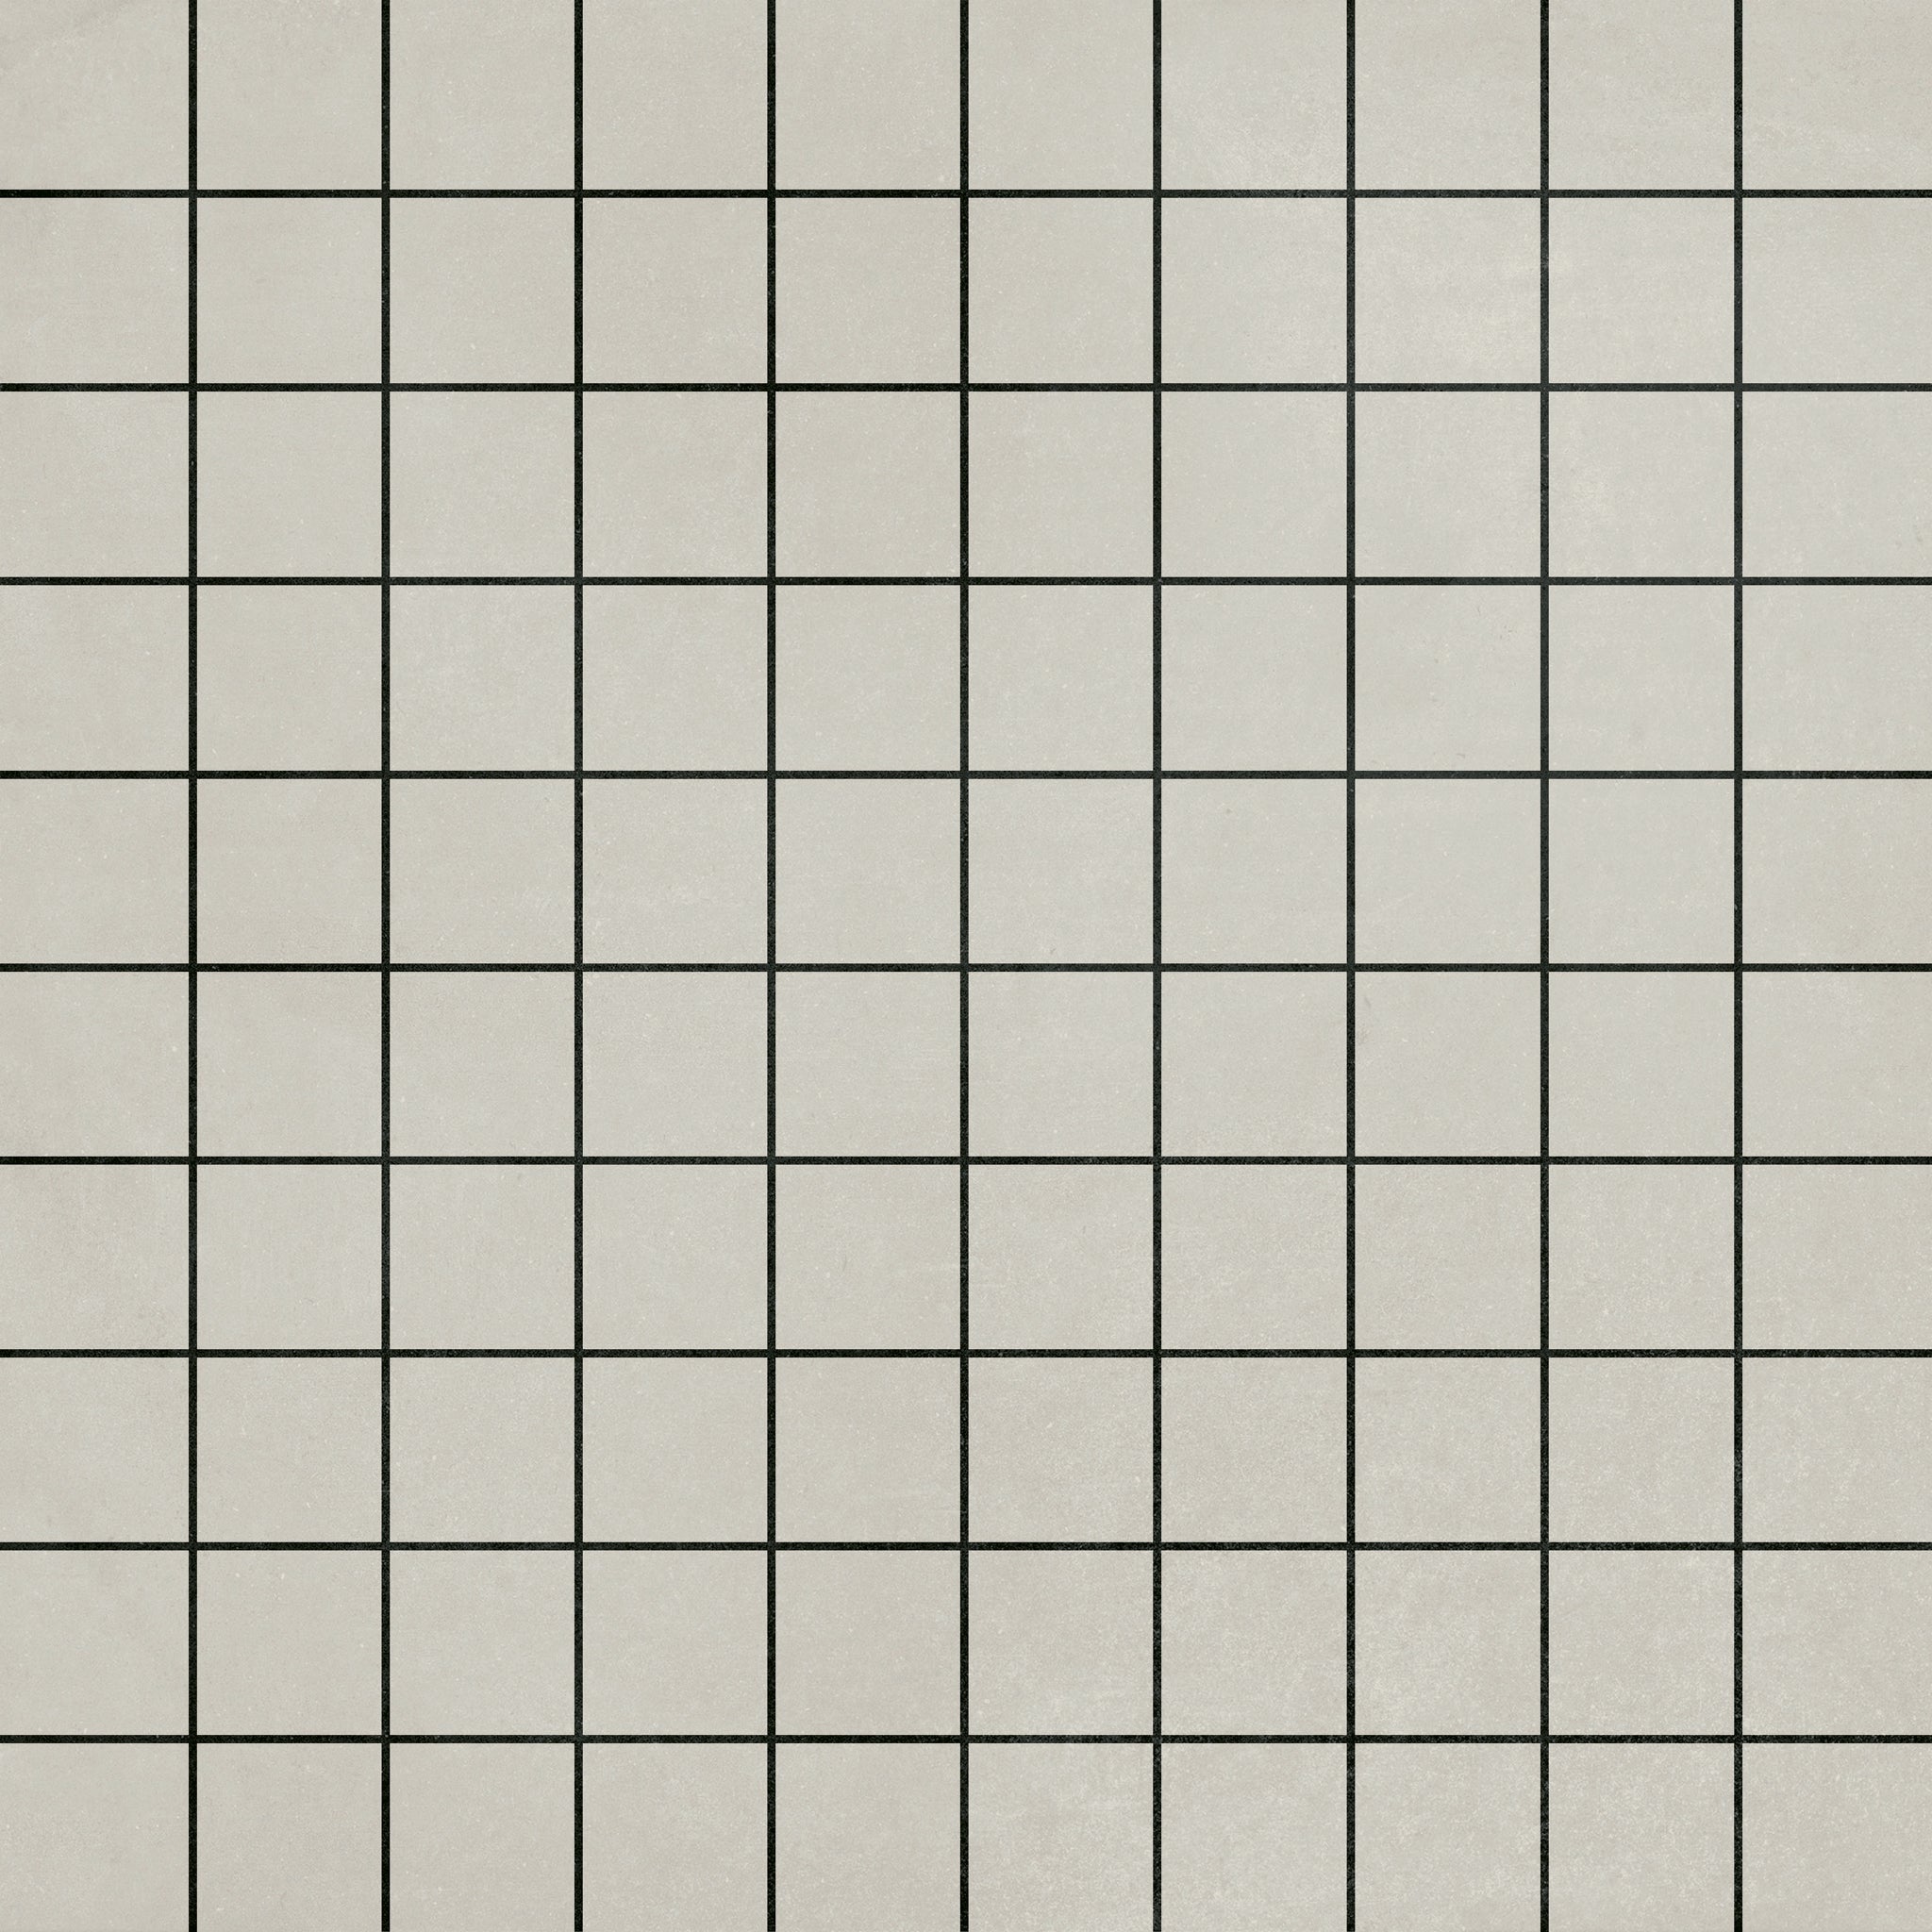 Futura Grid Black